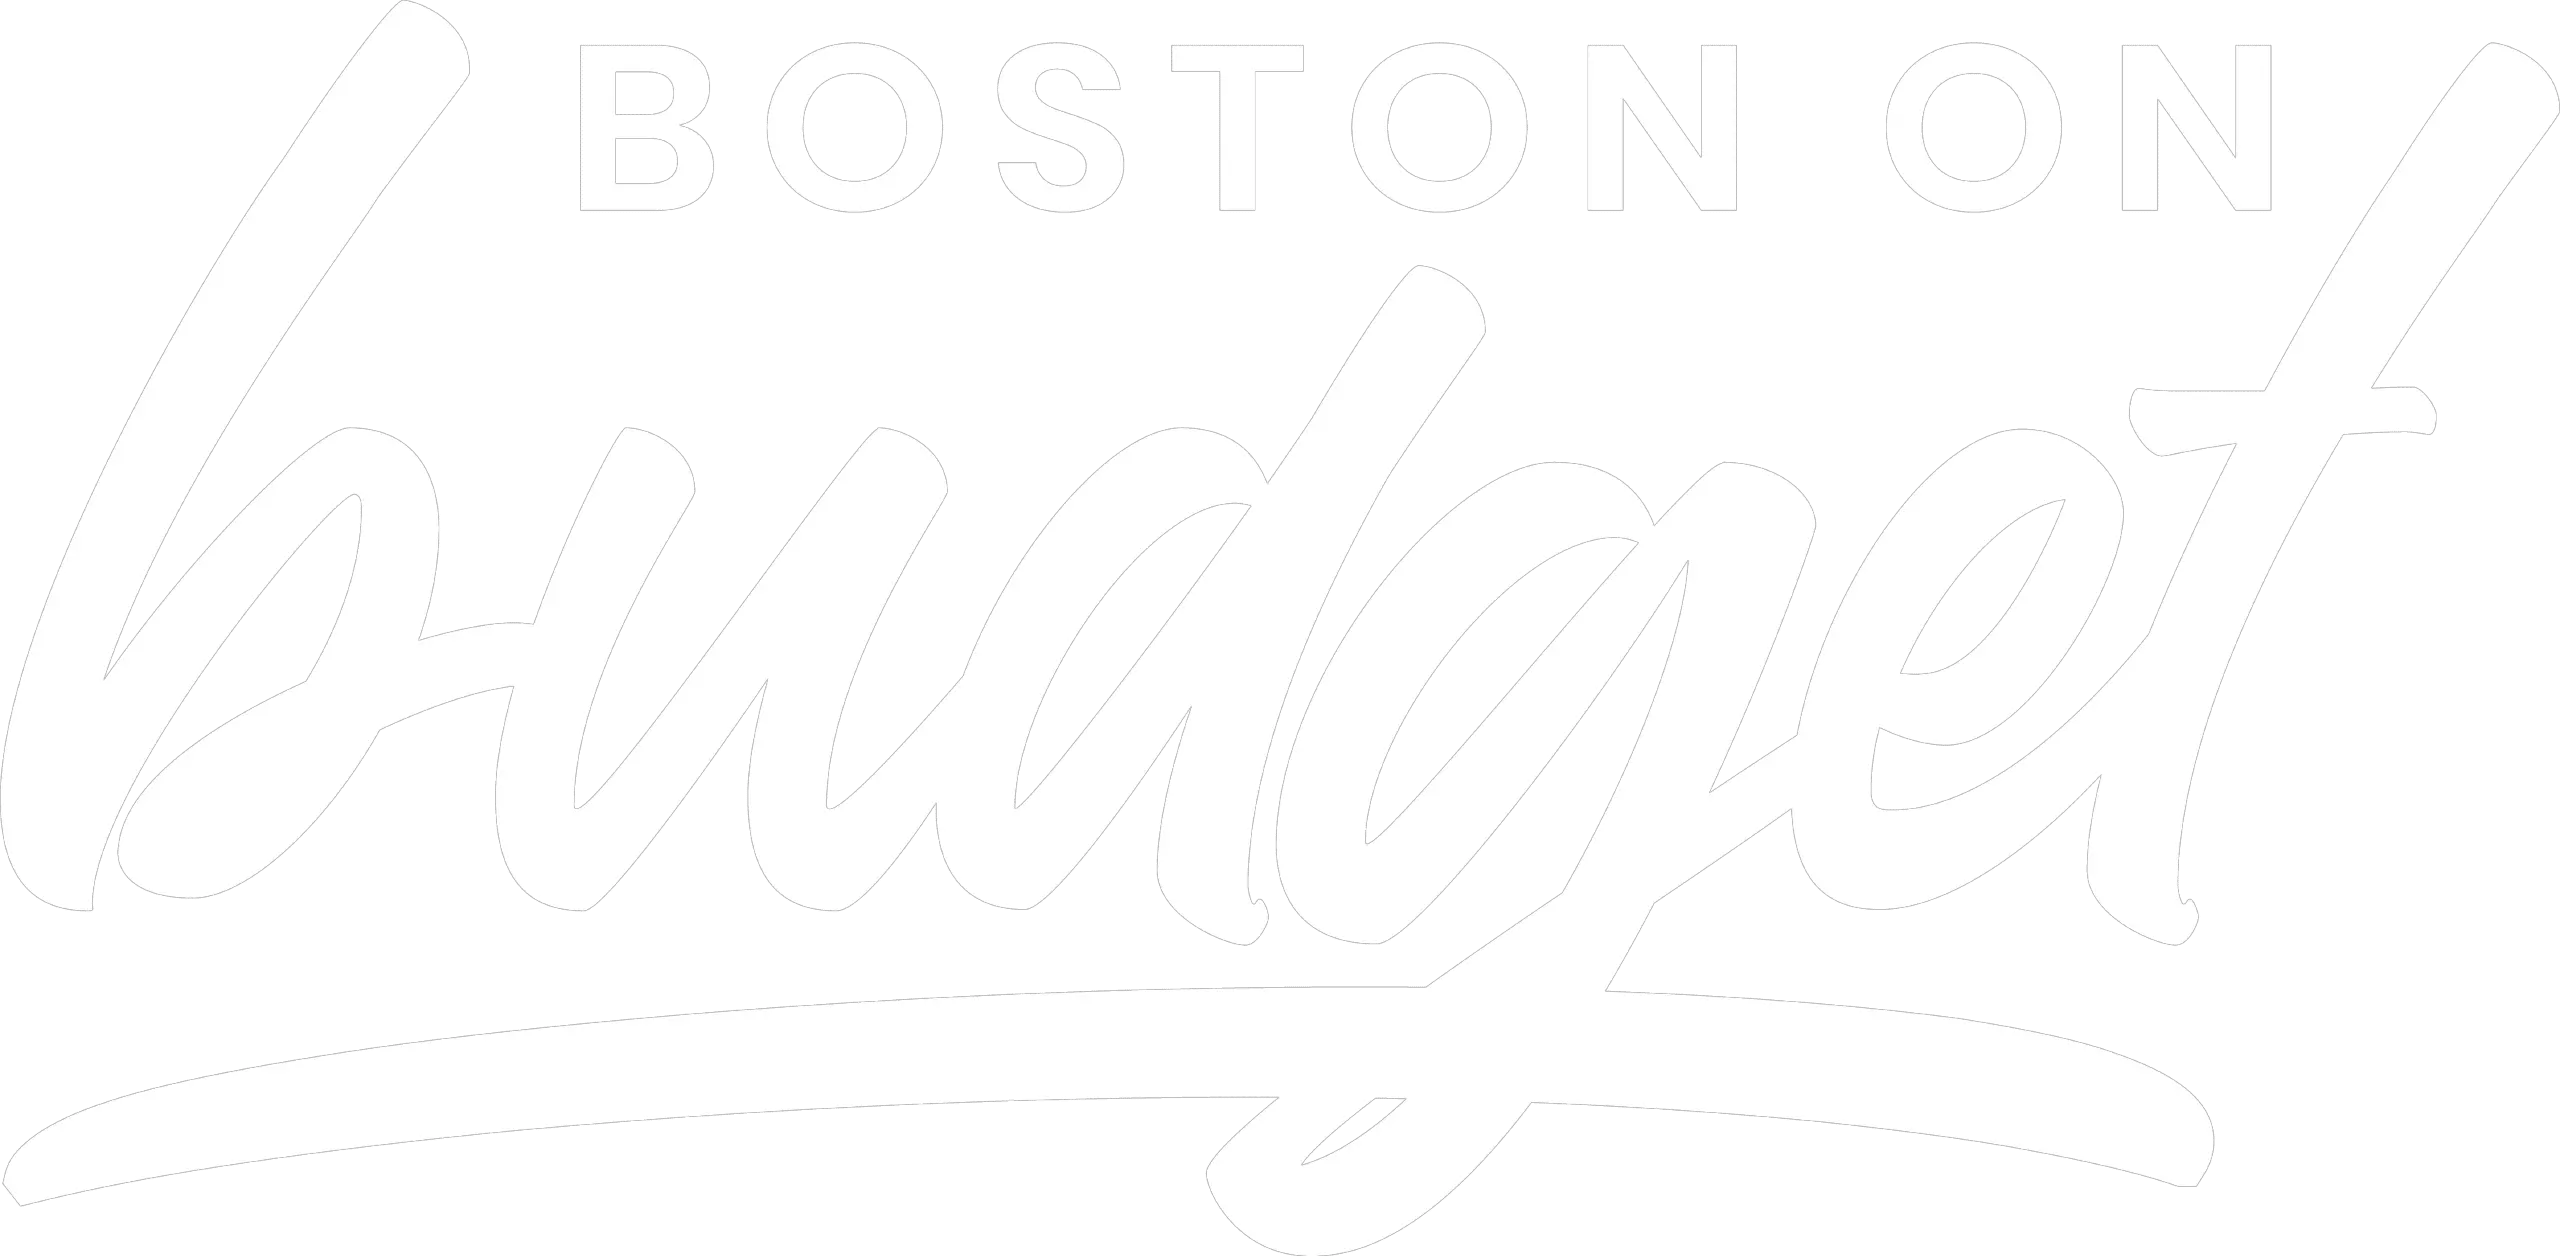 Boston on Budget